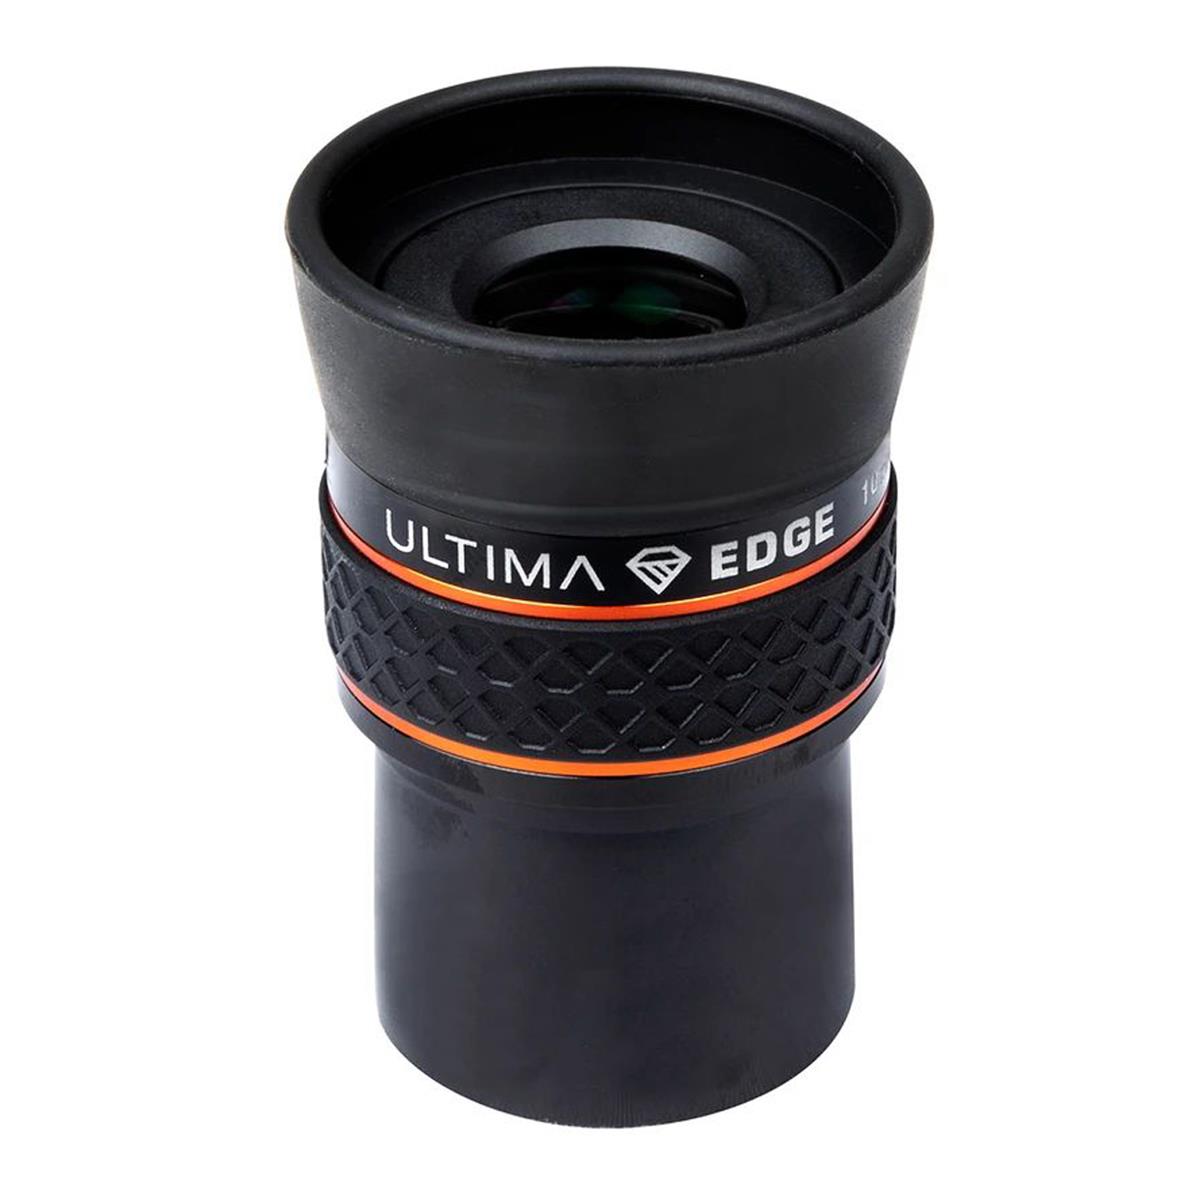 

Celestron 10mm Luminos Series 1.25 inch Eyepiece